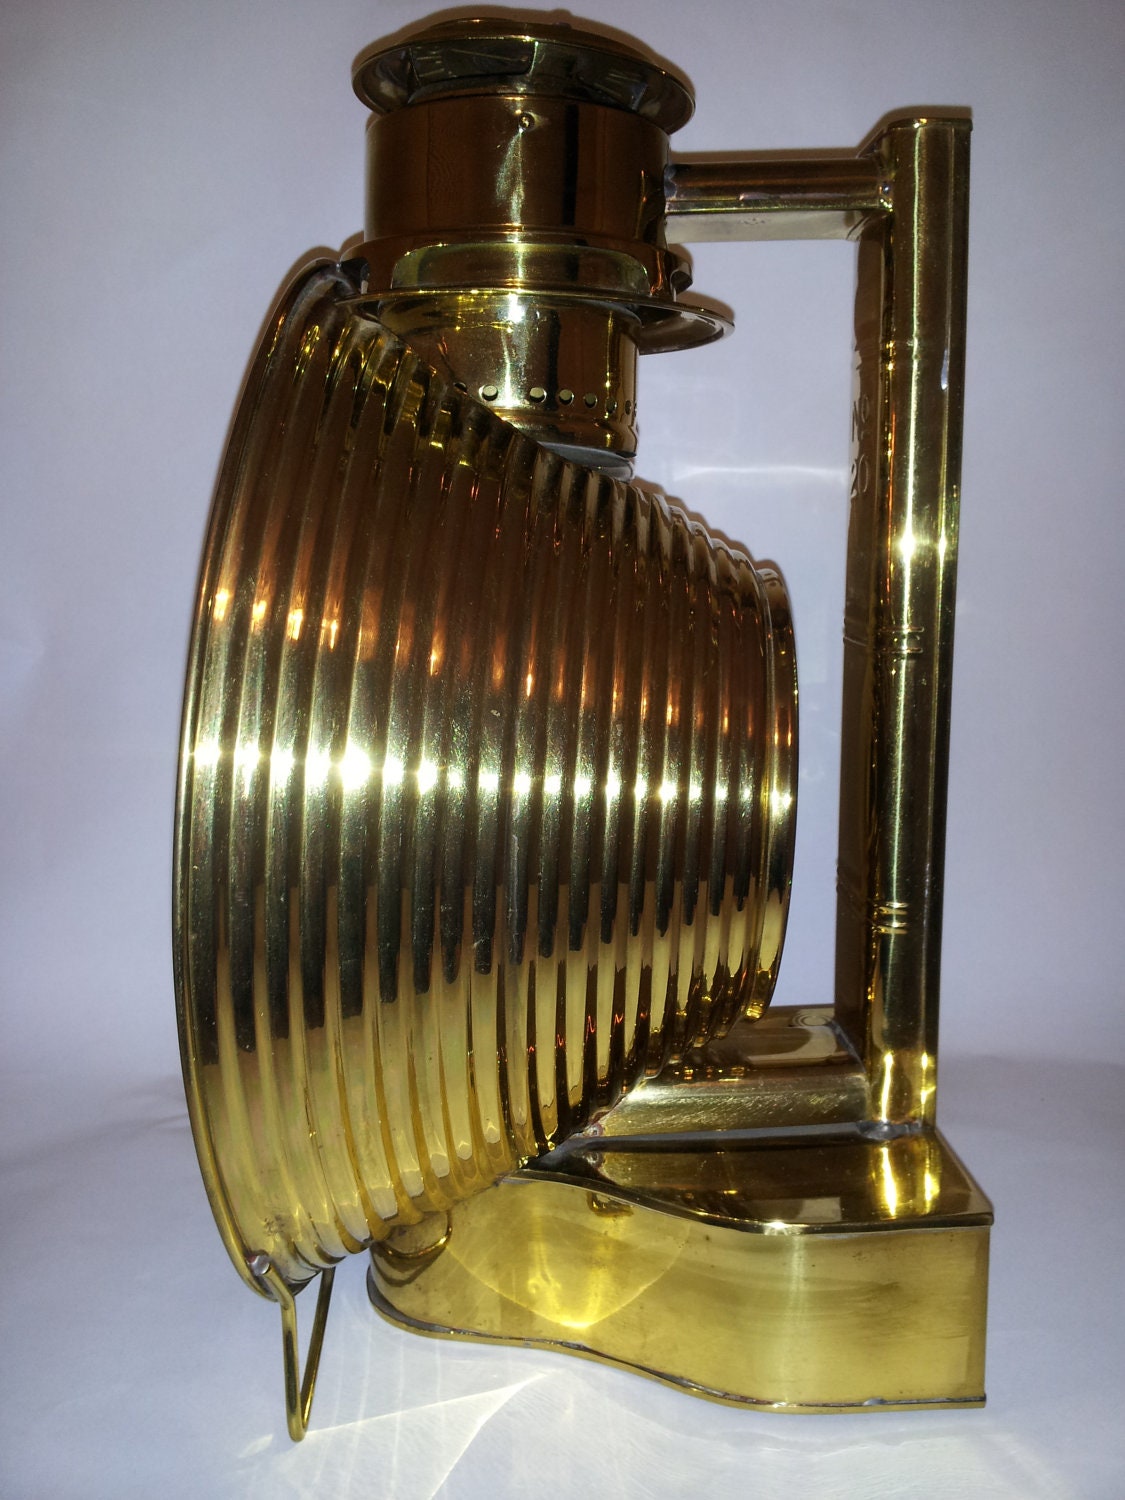 Brass Tallin MFG No. 20 Reflector Lantern